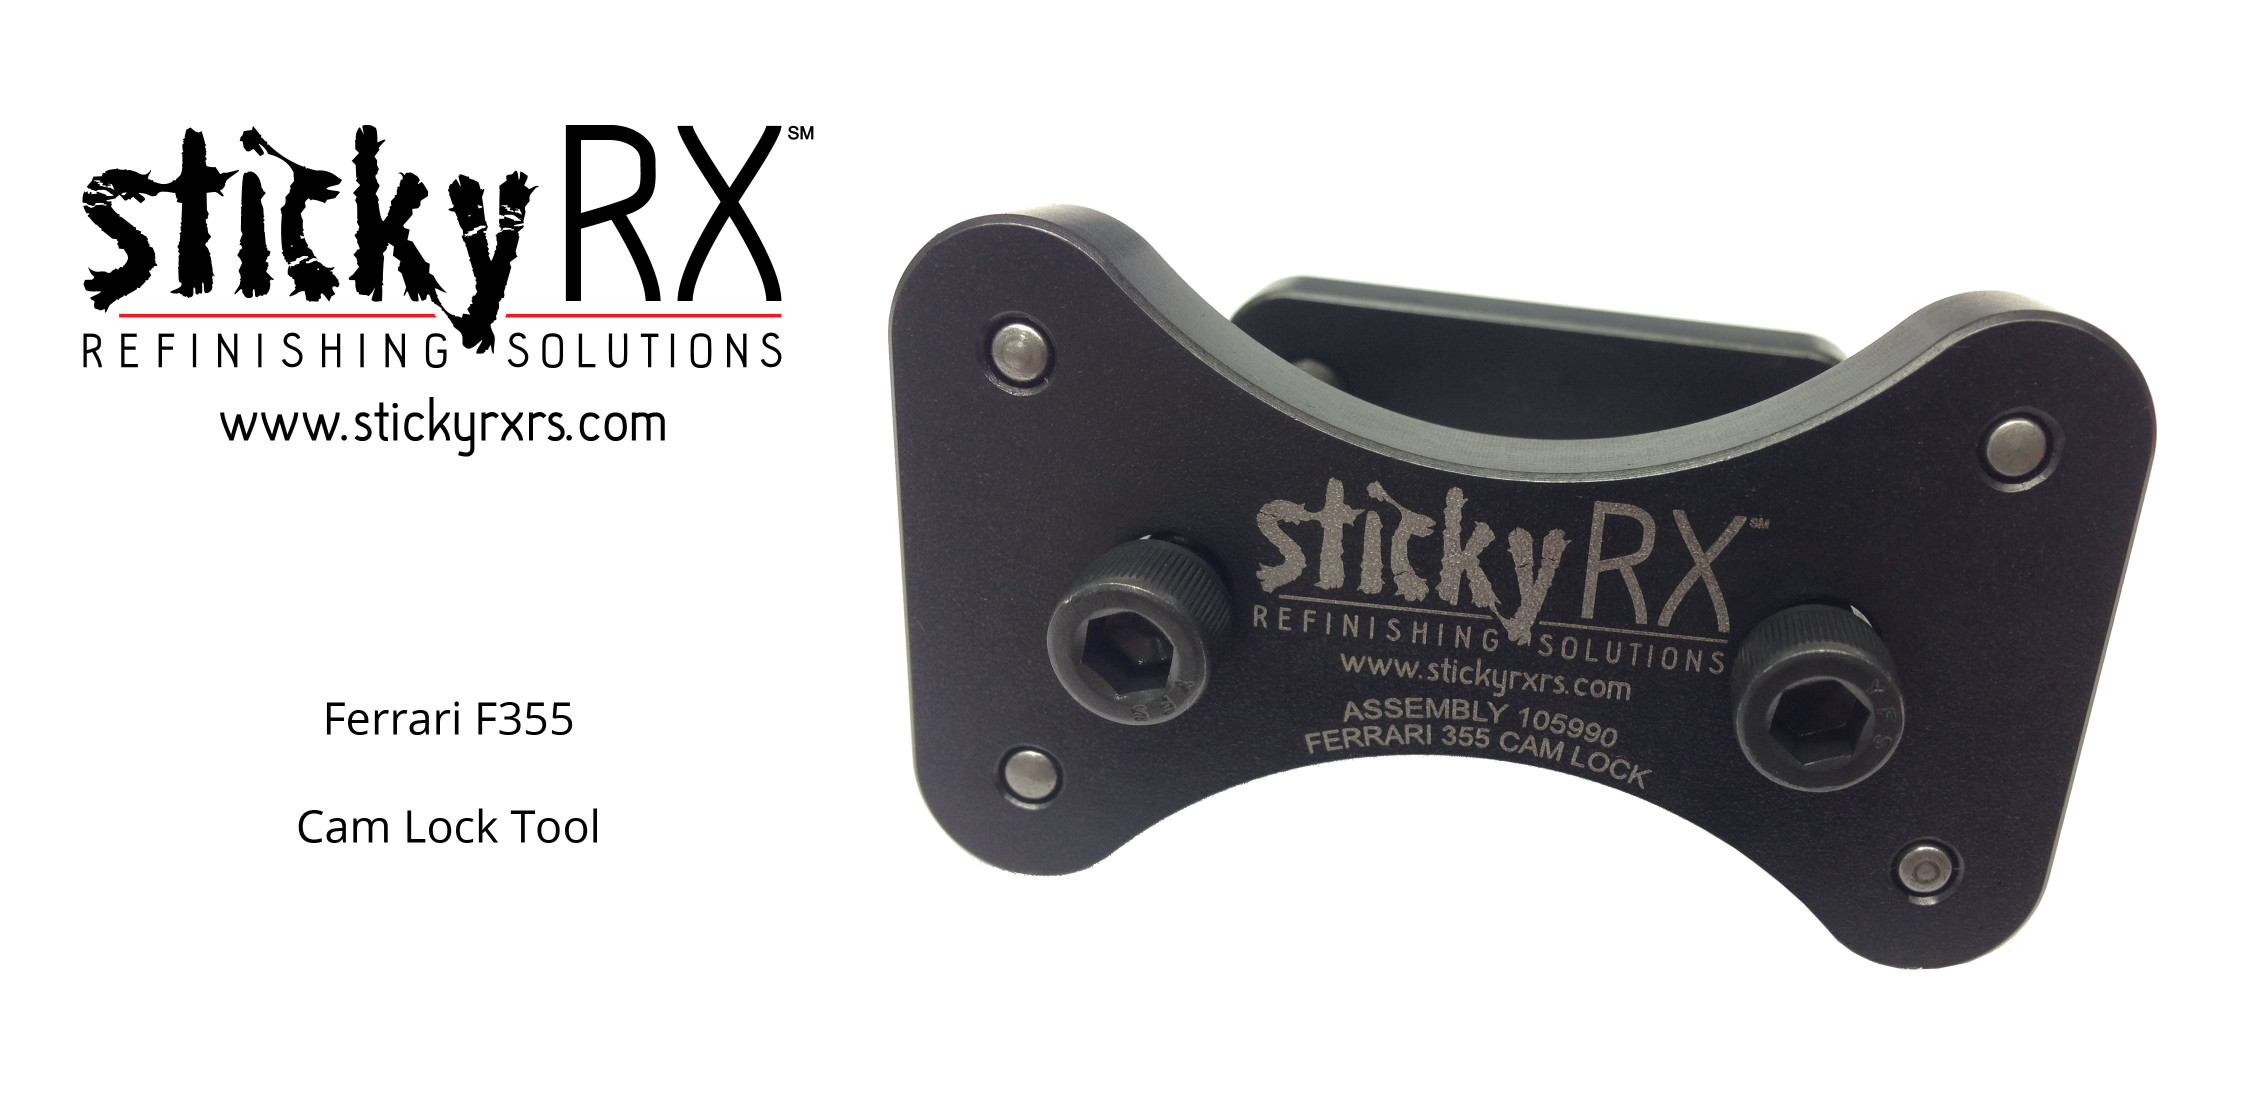 Sticky RX Refinishing Solutions_Ferrari_355_CAM Locks-01